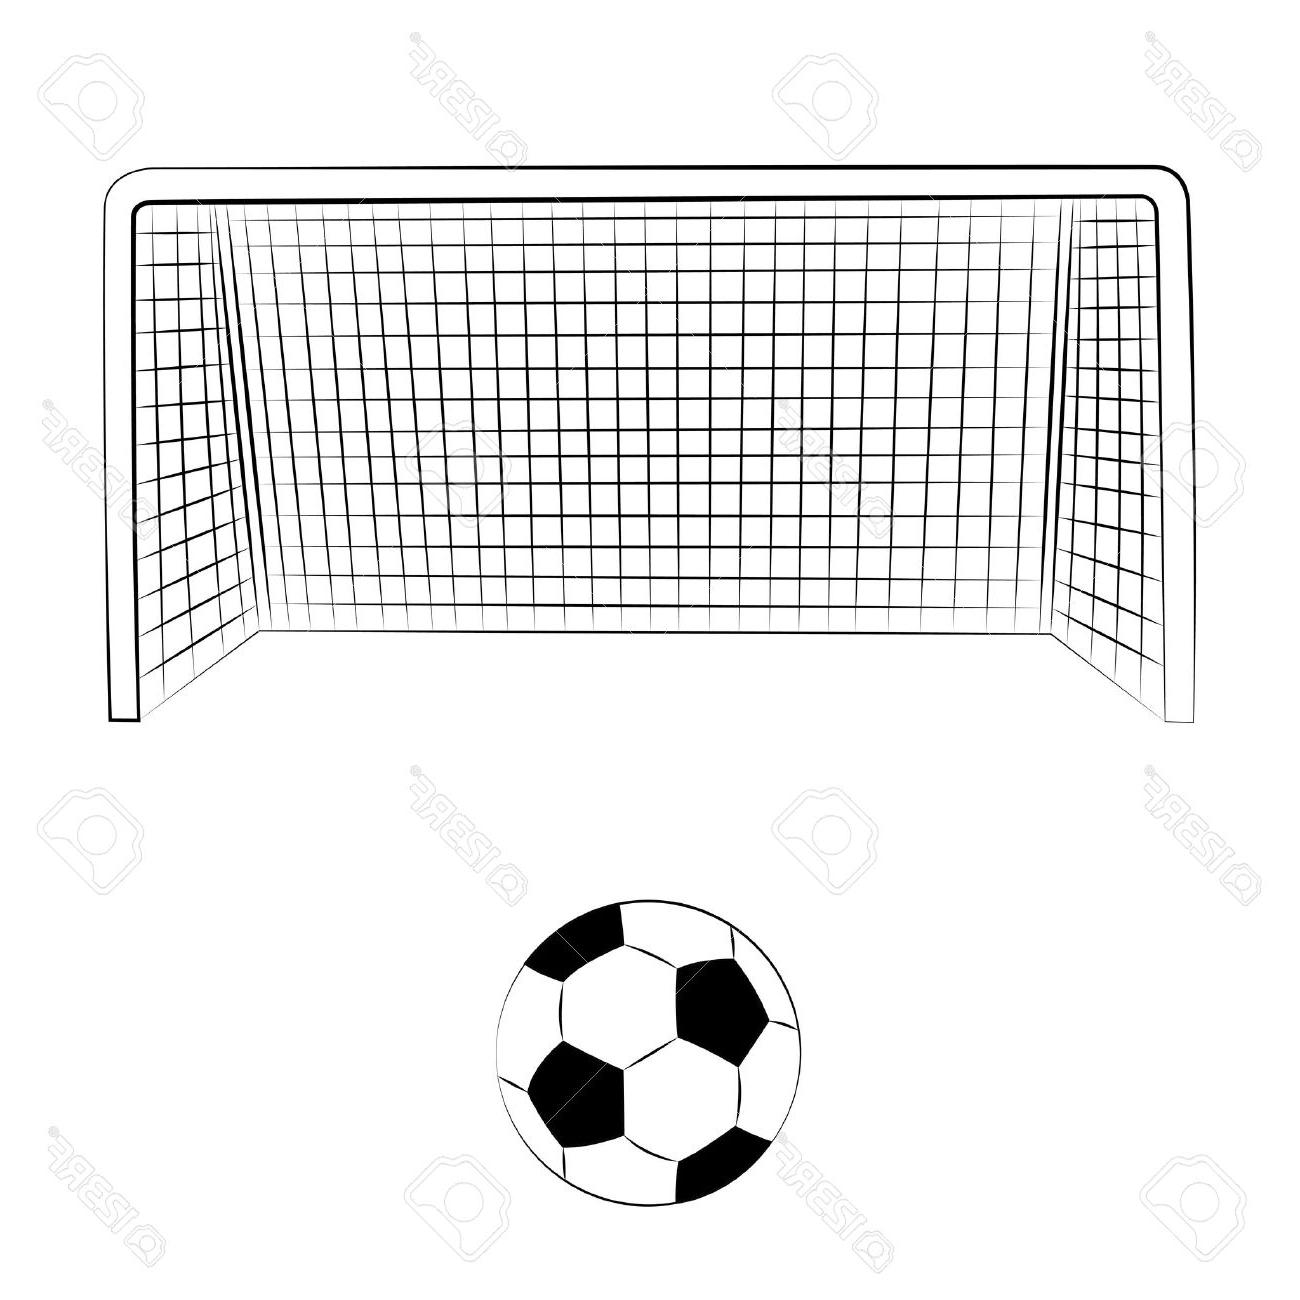 Best Soccer Goal Vector Side Pictures » Free Vector Art.